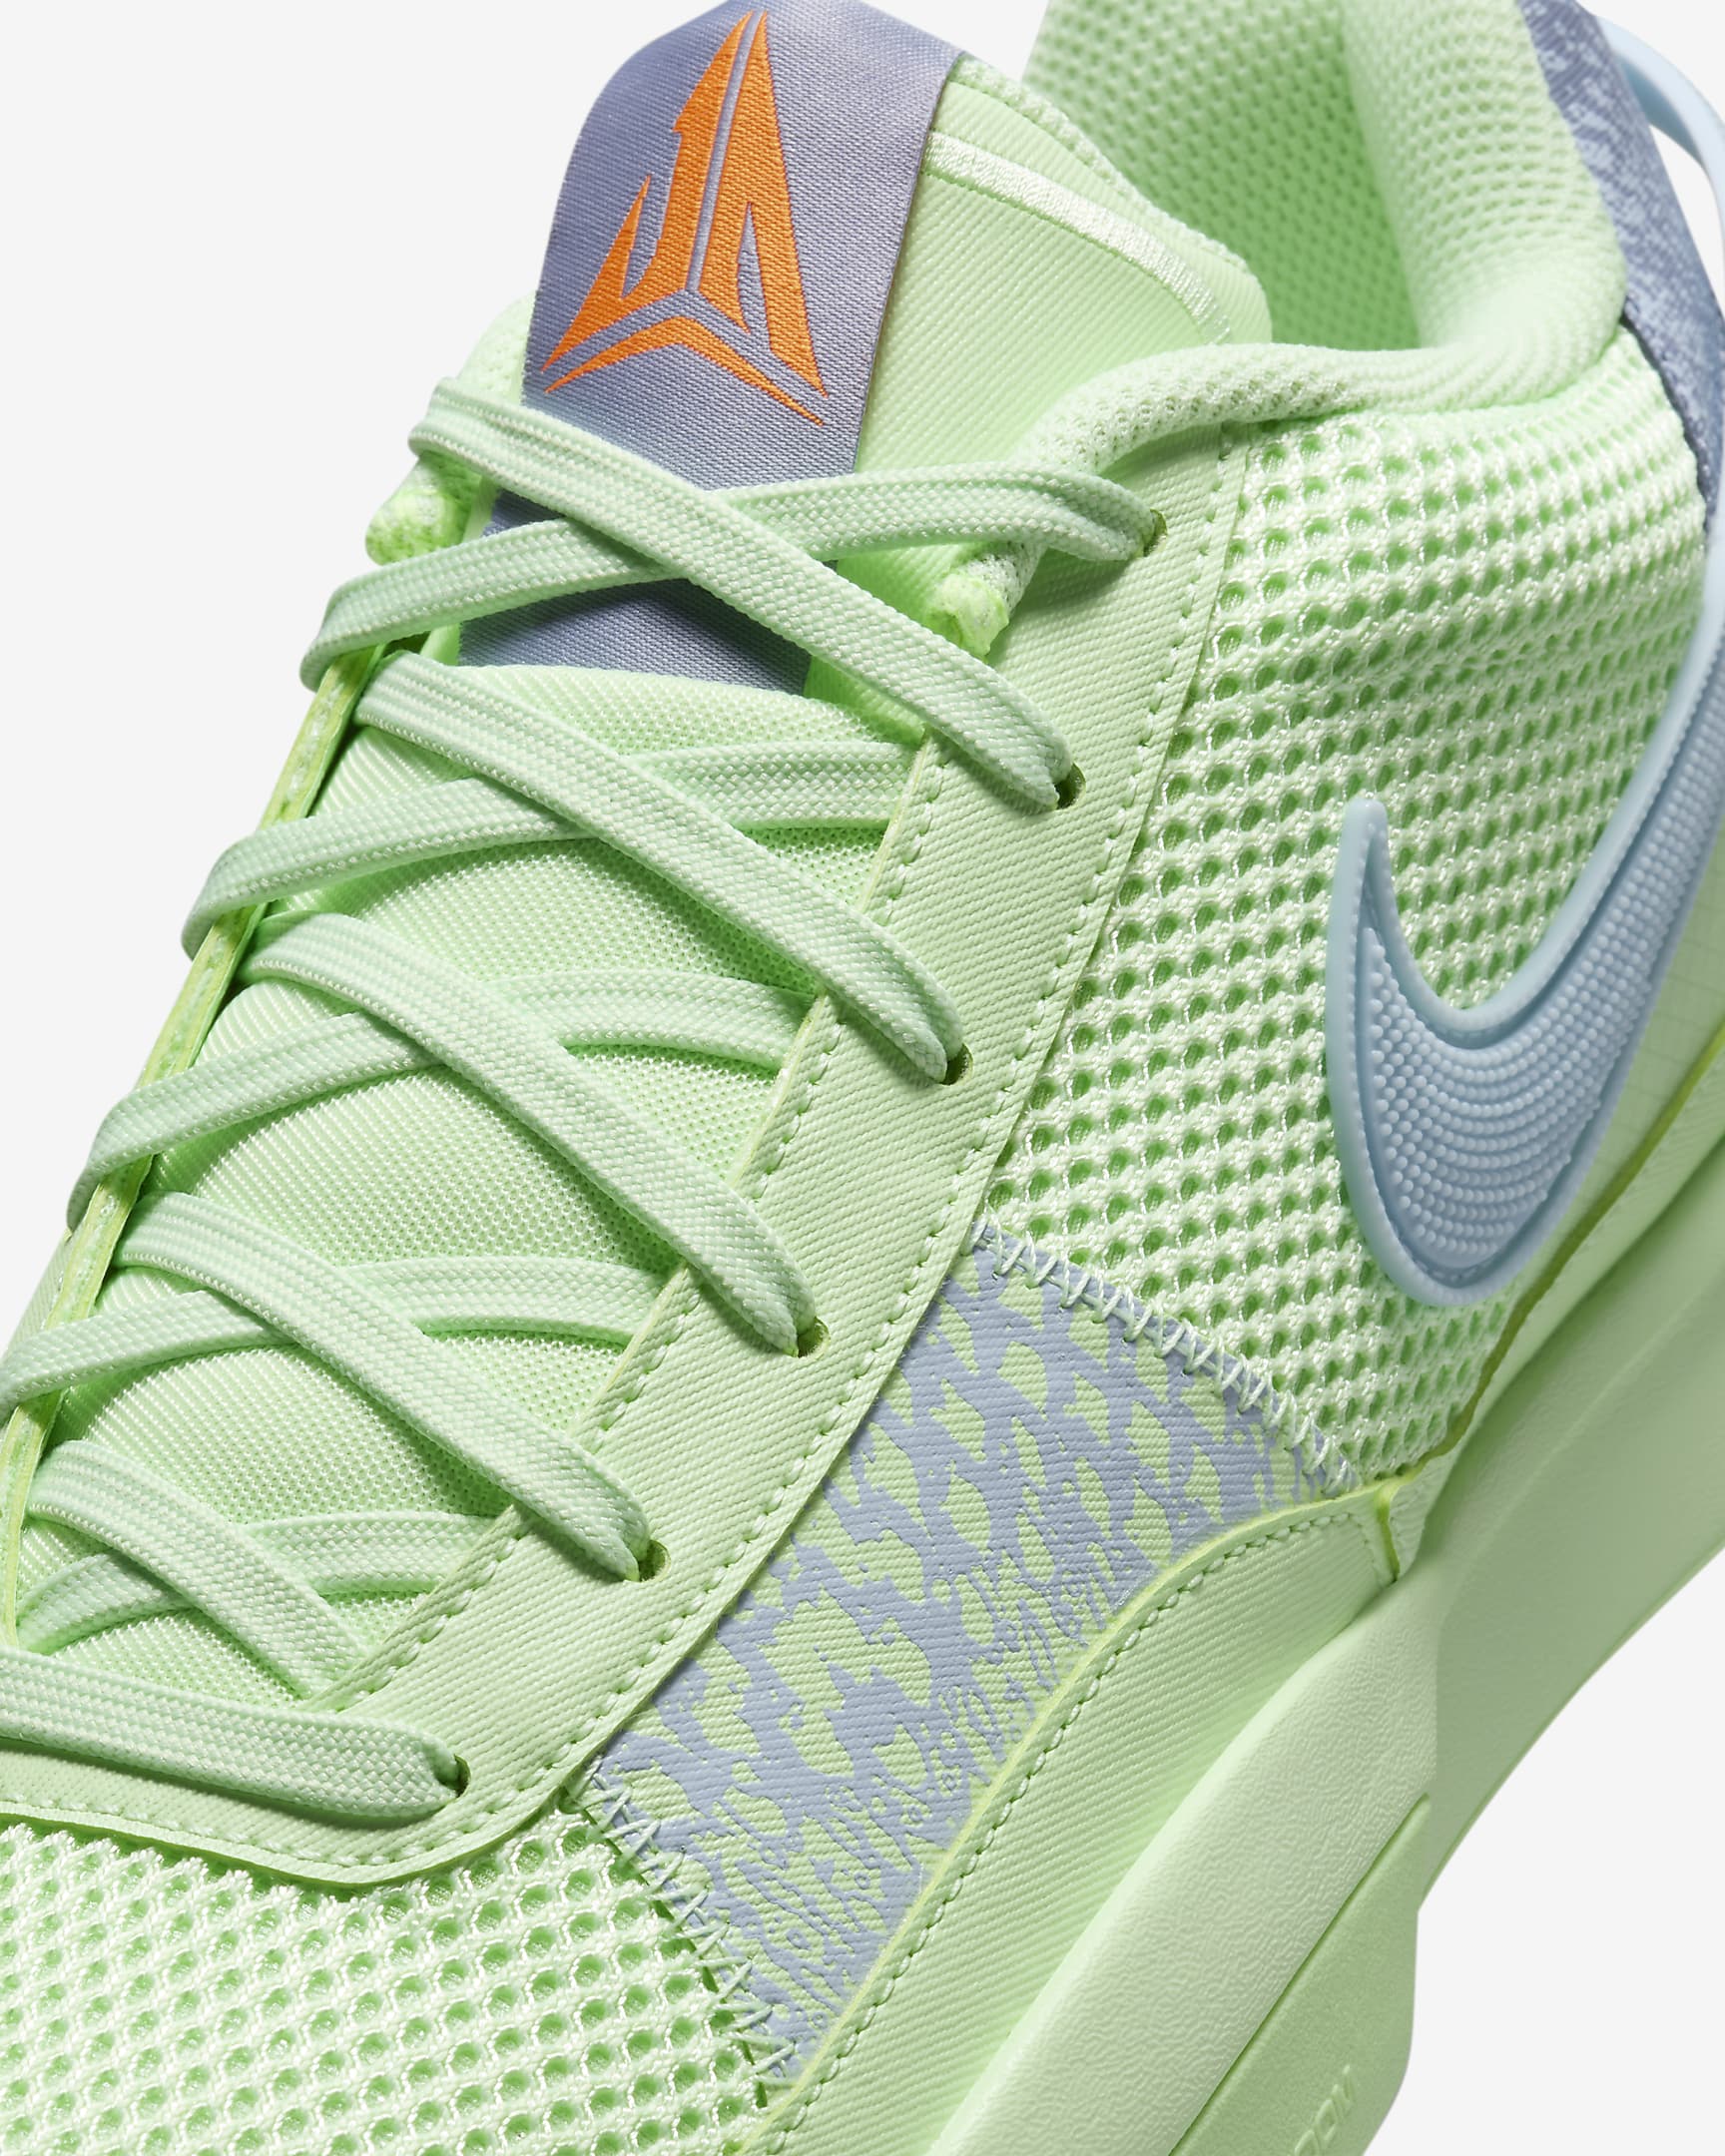 Ja 1 "Day" Basketball Shoes - Bright Mandarin/Vapor Green/Light Armory Blue/Multi-Color